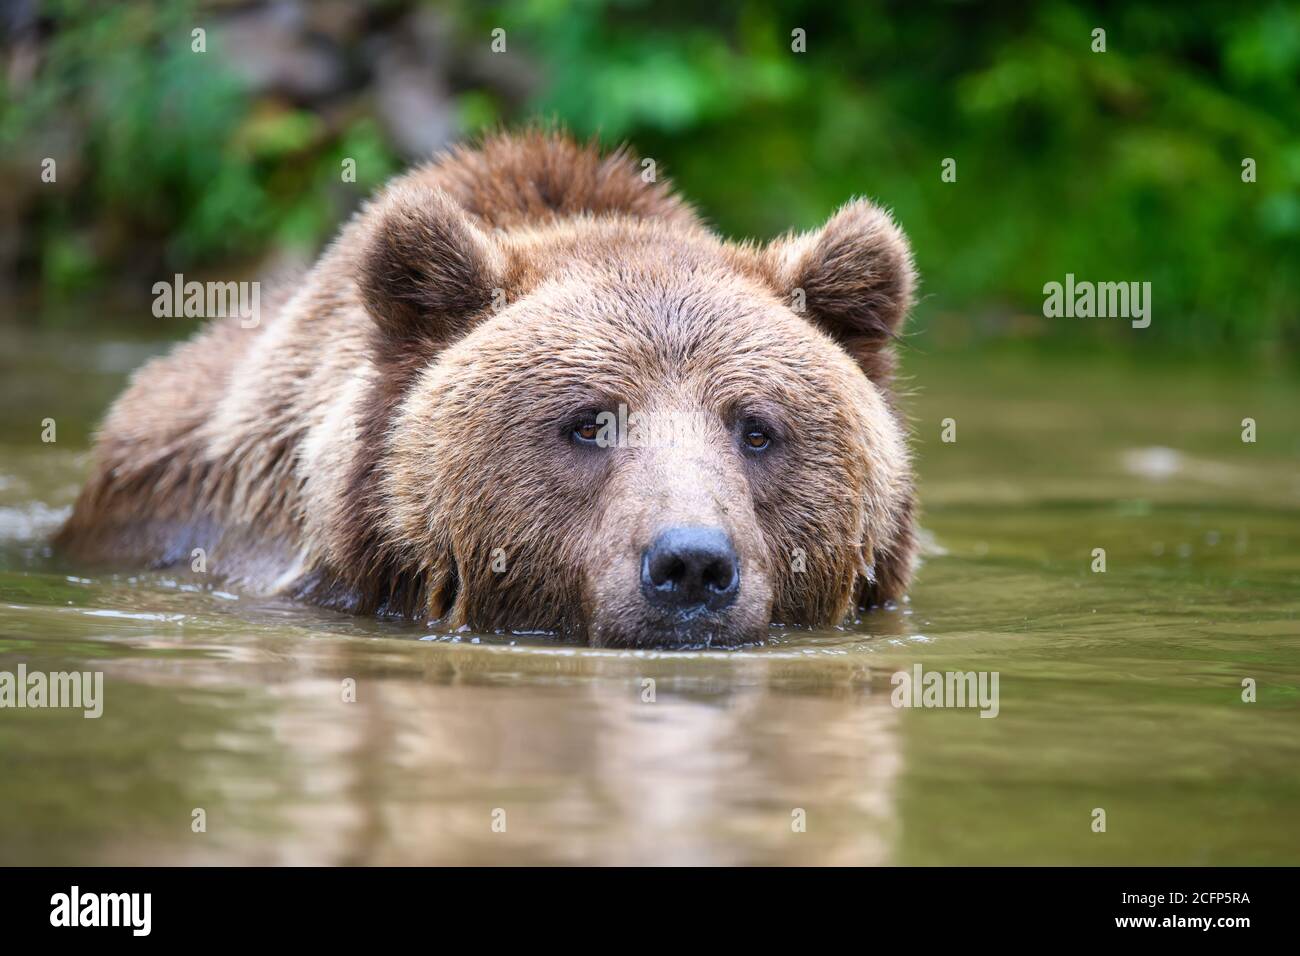 Wild adult Brown Bear (Ursus Arctos) in the water. Dangerous animal in nature. Wildlife scene Stock Photo